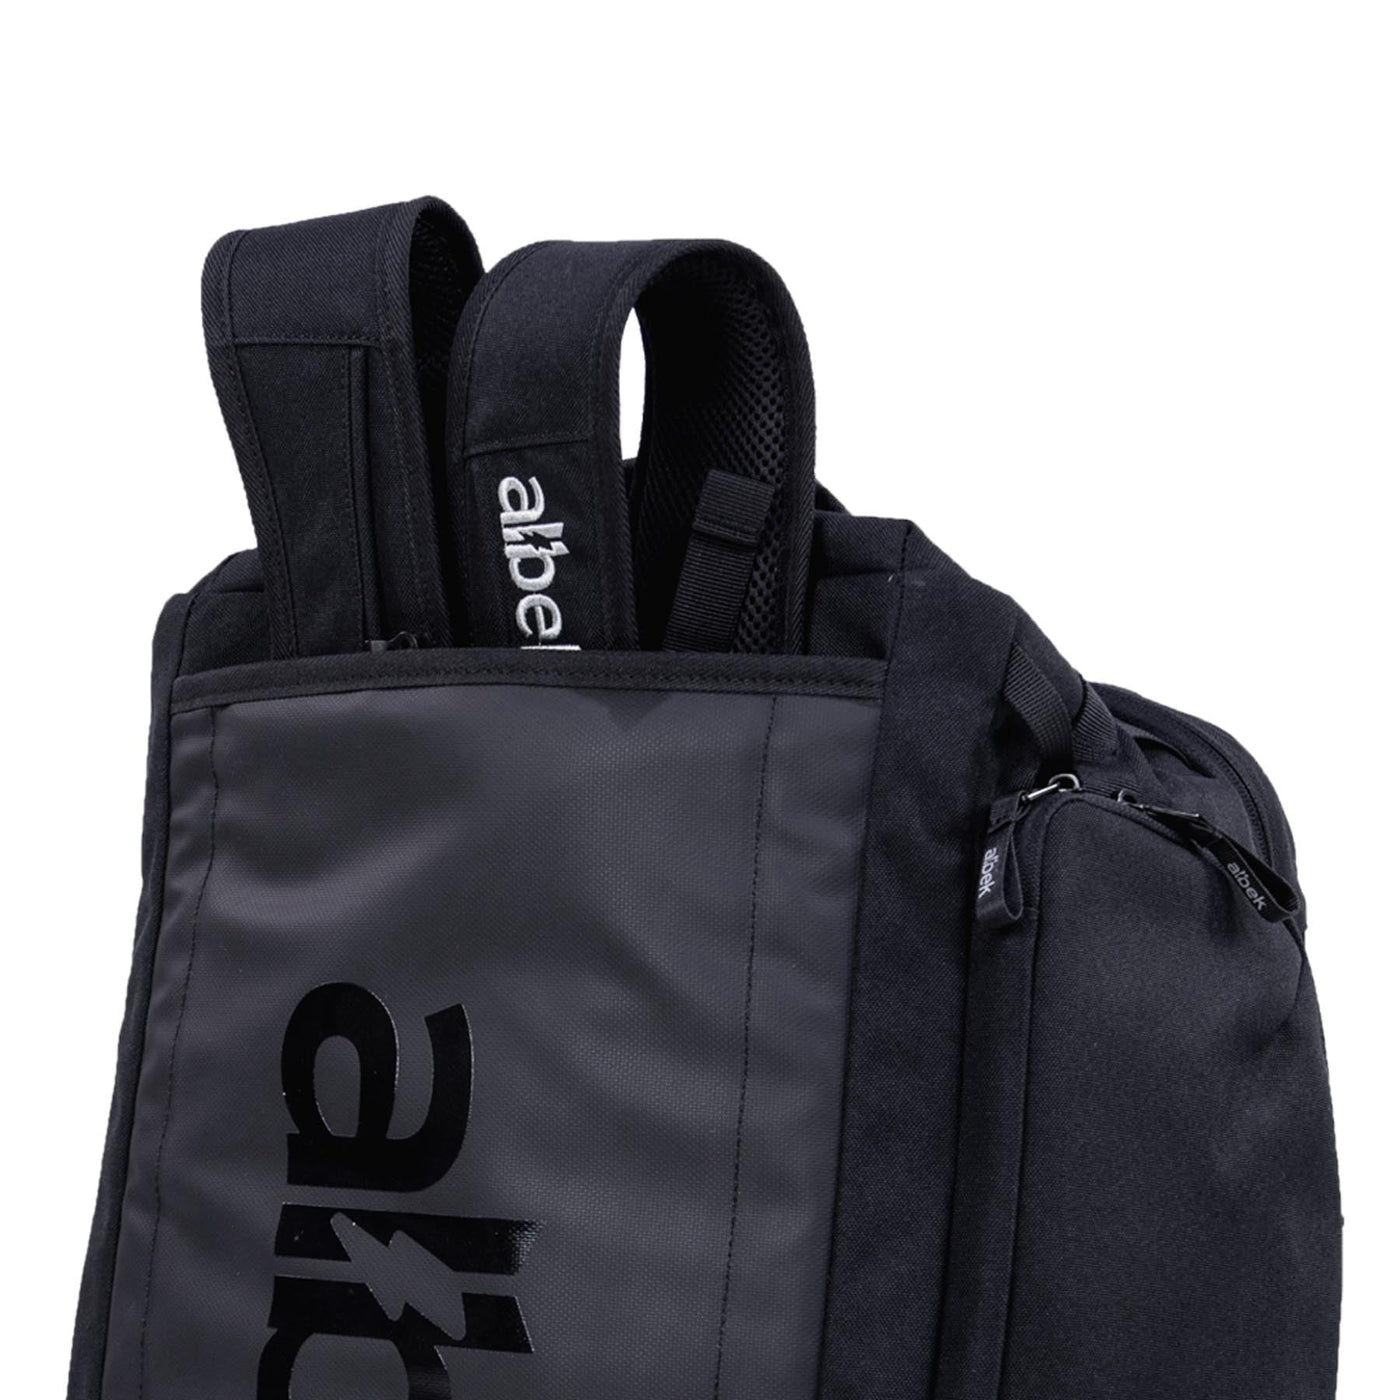 Albek Skytrail 51 Duffle Bag - Black 8Lines Shop - Fast Shipping